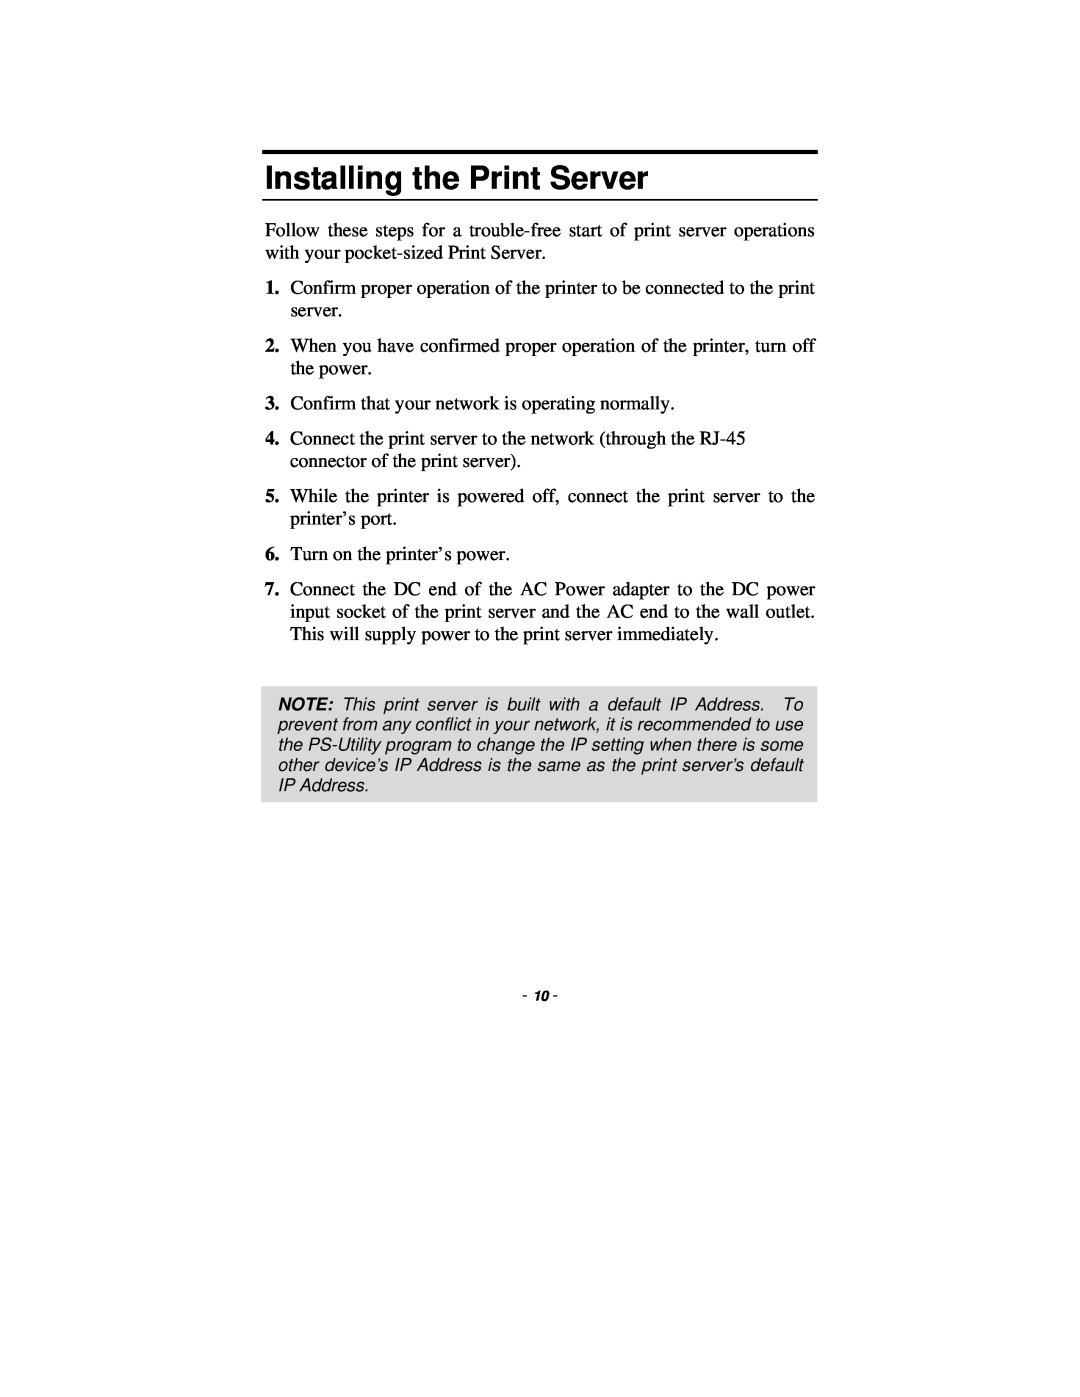 TRENDnet TE100-P1P manual Installing the Print Server 